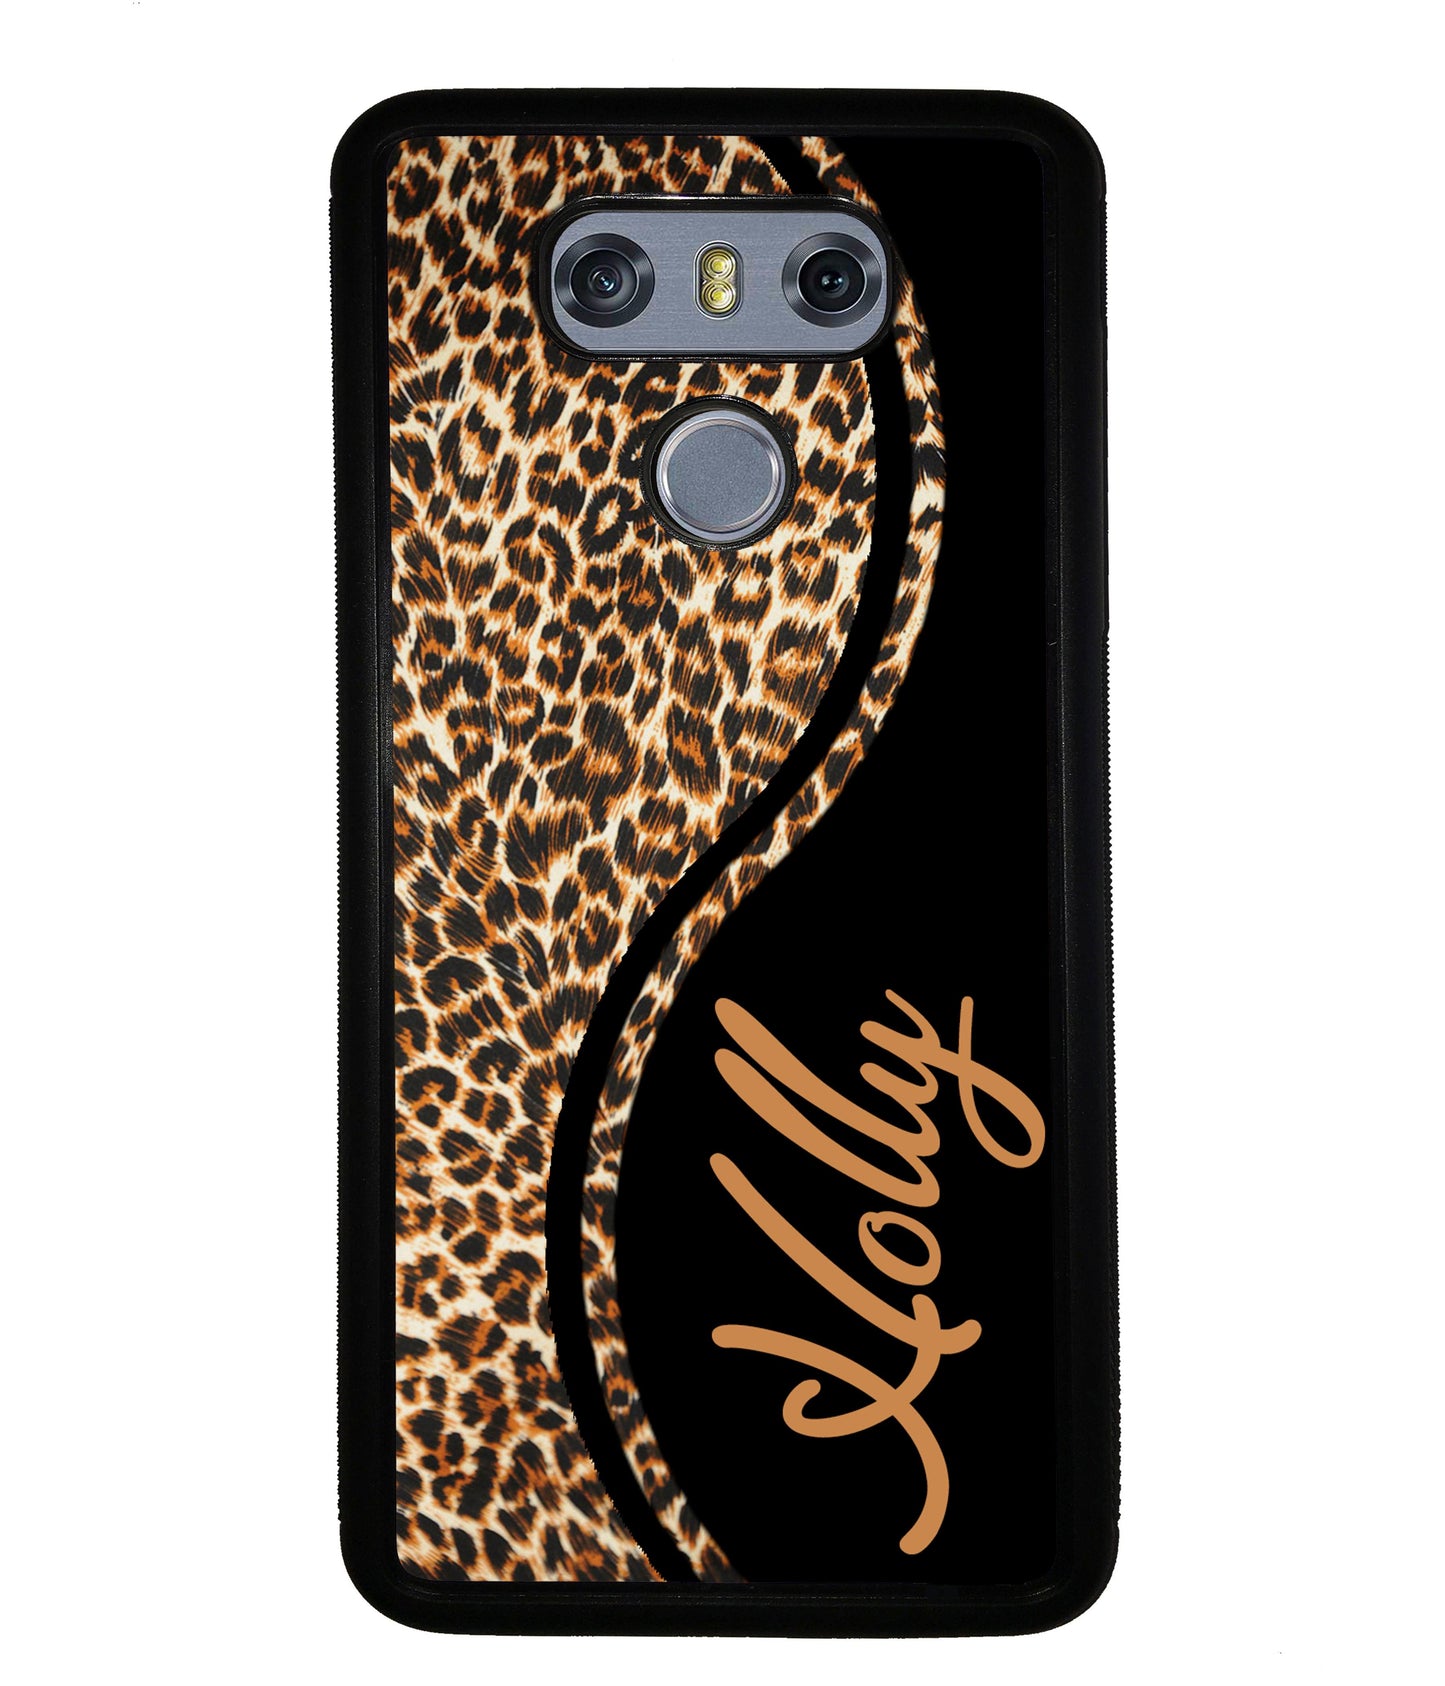 Leopard Curvy Personalized | LG Phone Case